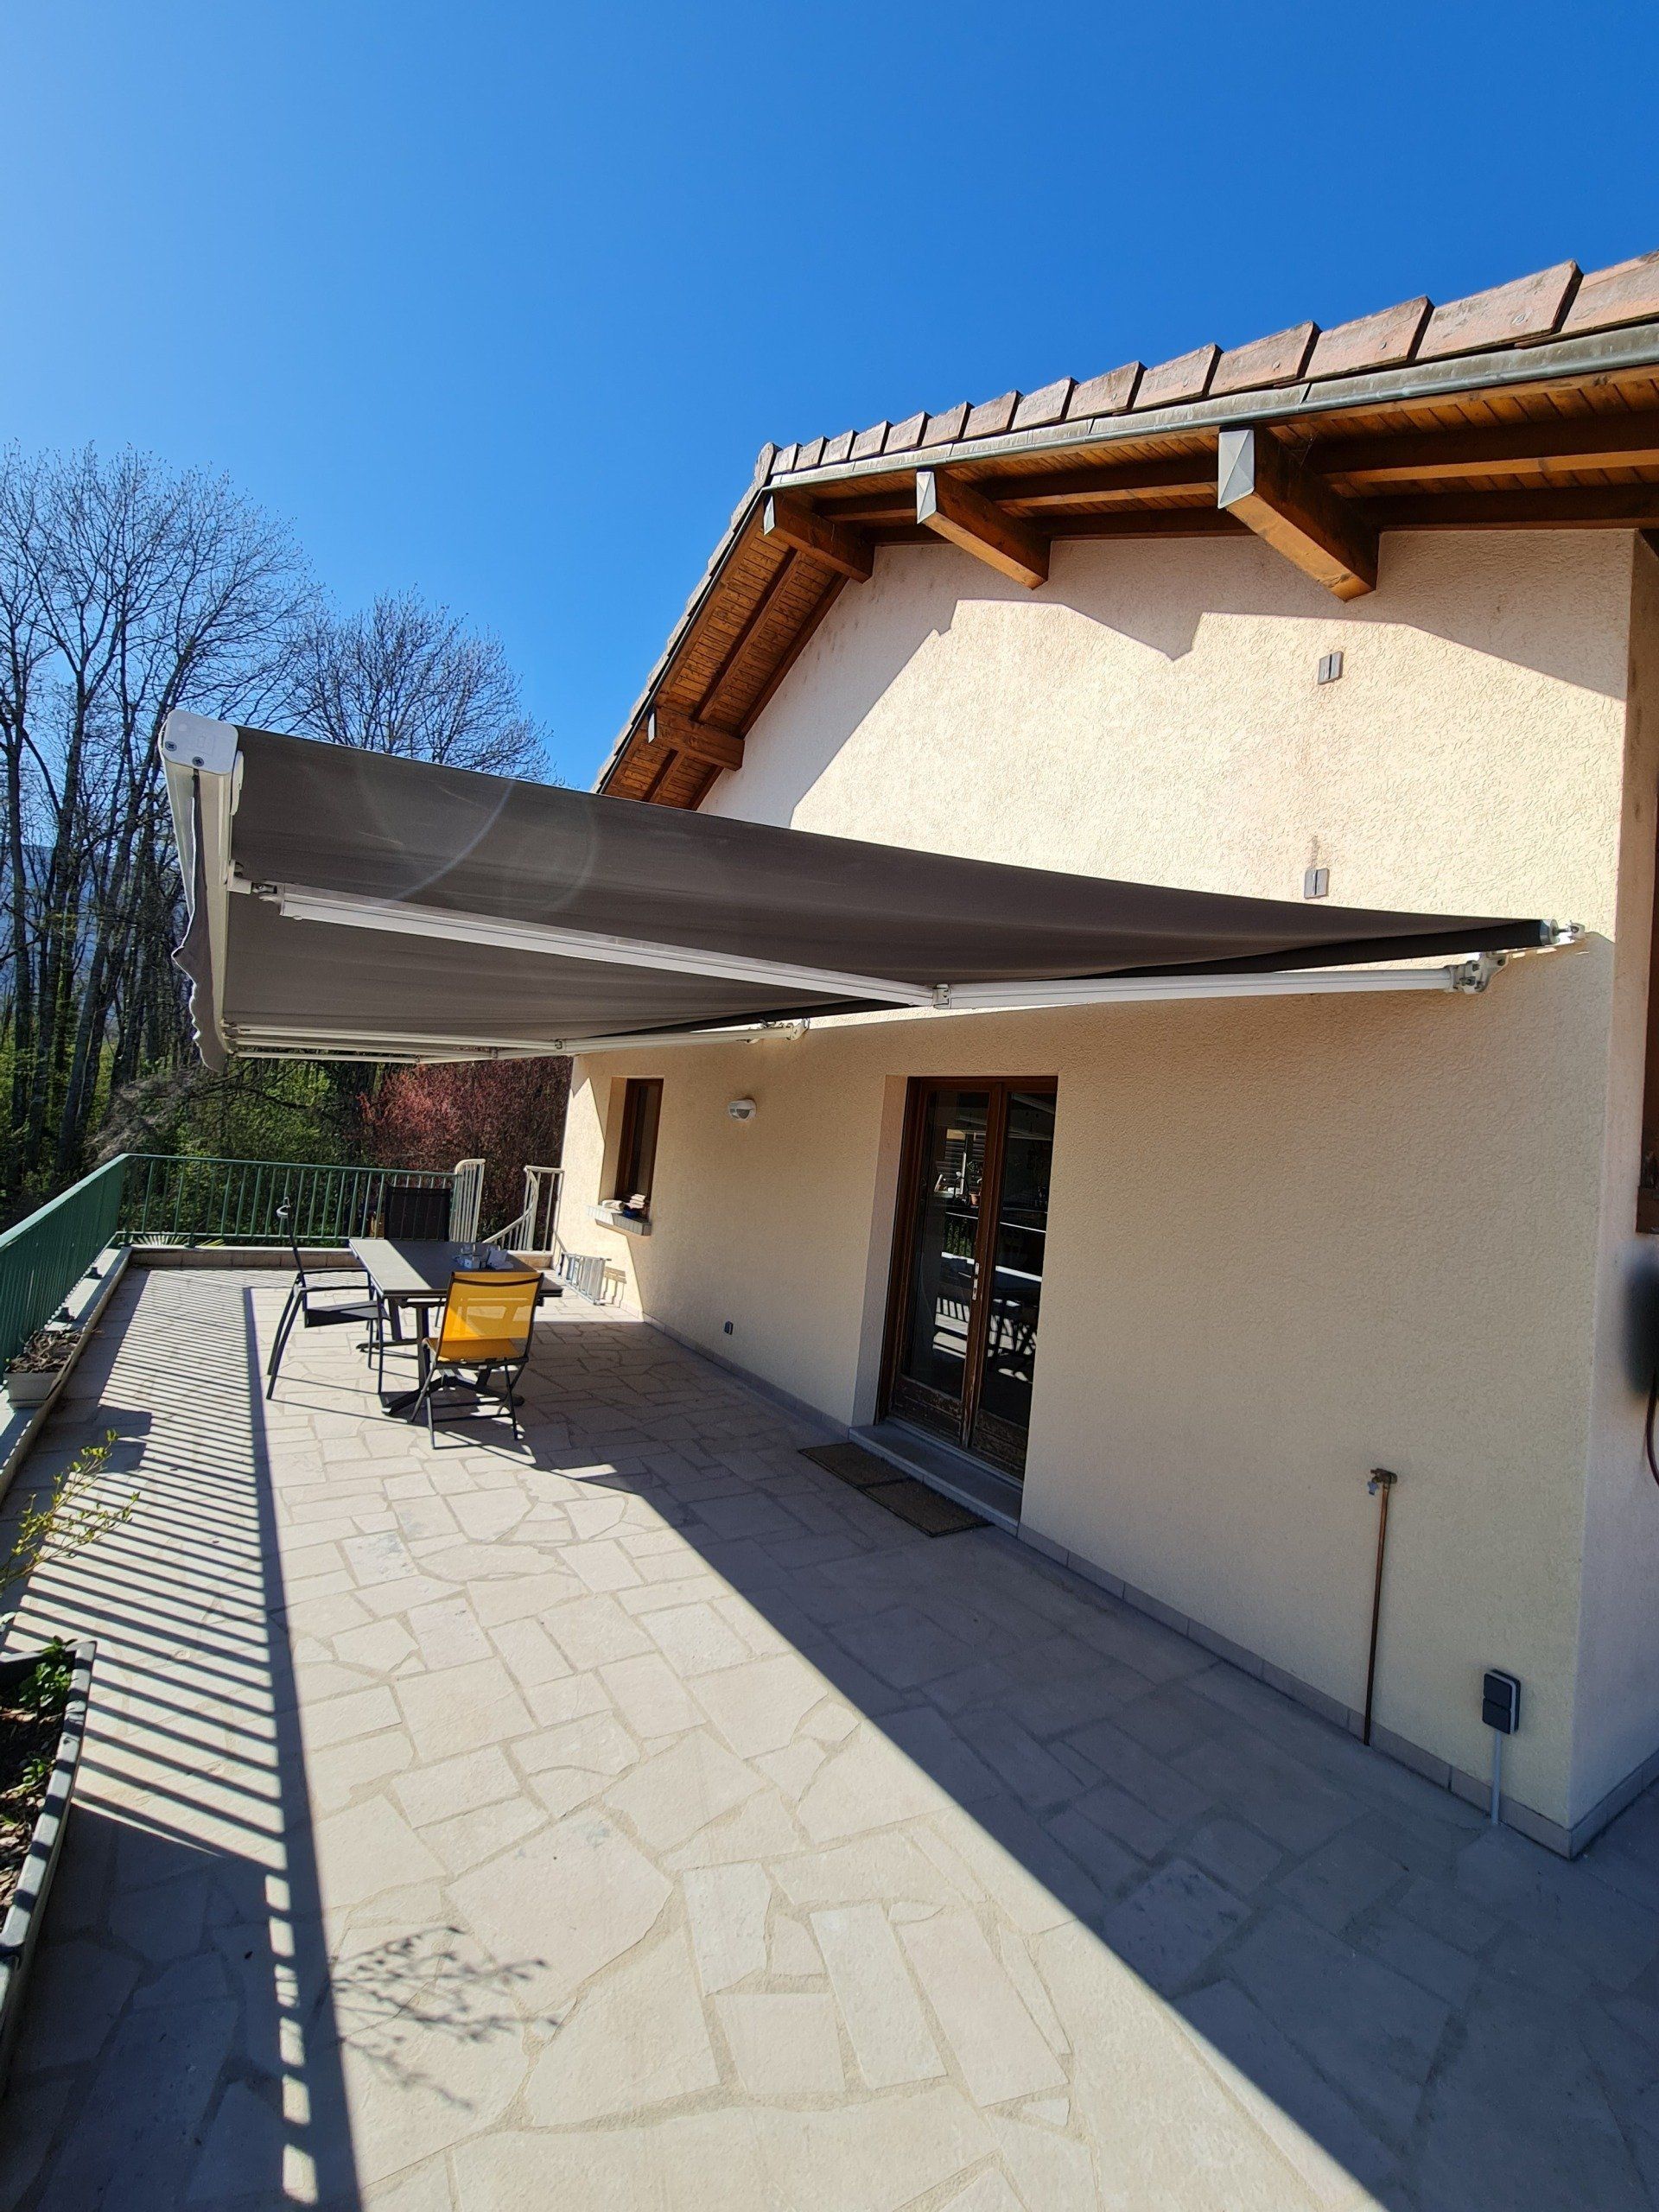 Tente solaire de terrasse et façade